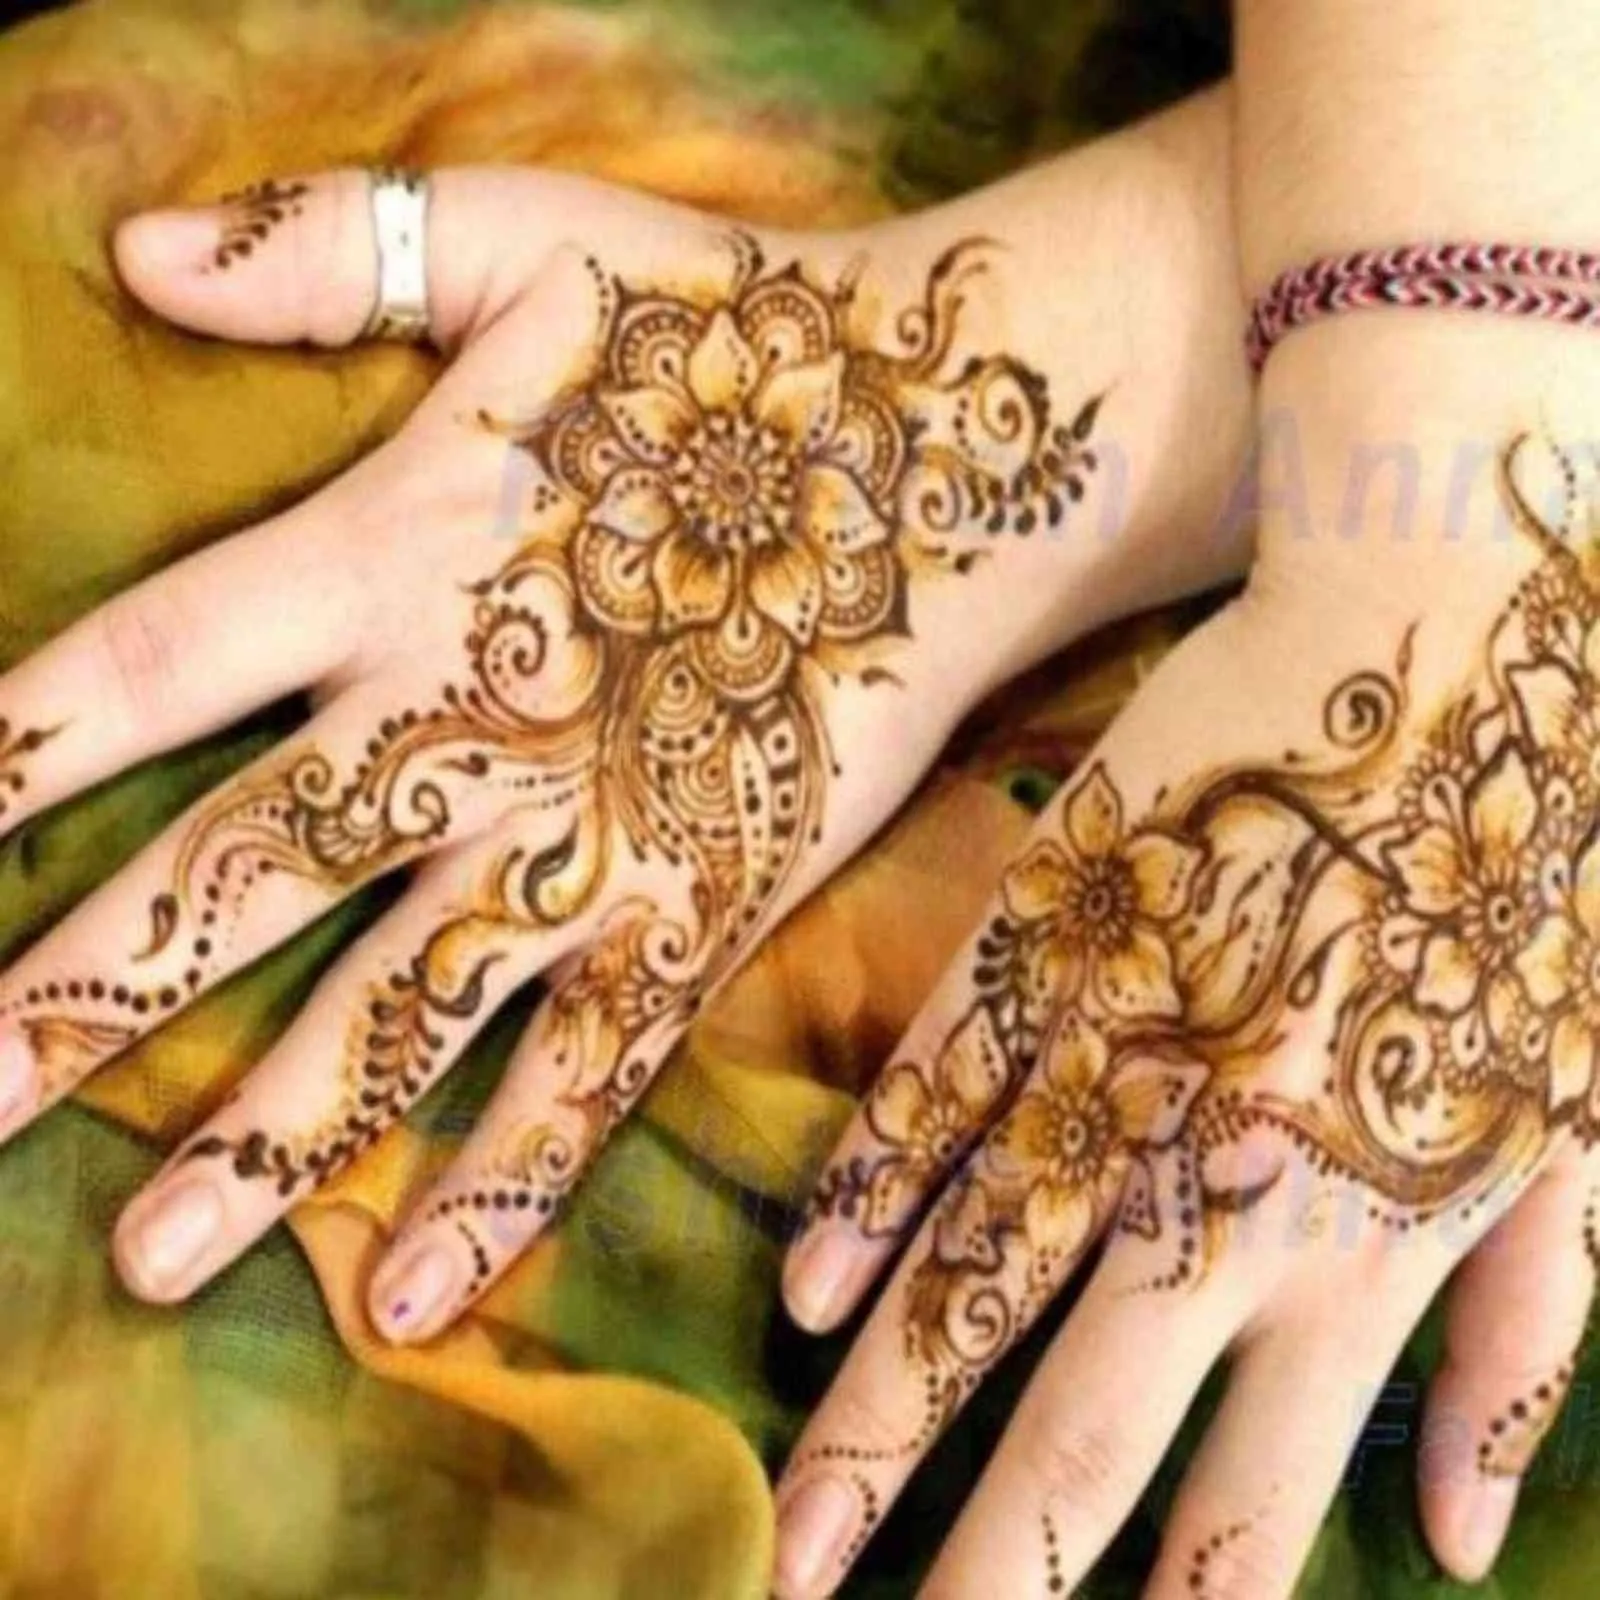 Henna tattoo kit,Indian Temporary Tattoo Stencils Glitter Airbrushing Diy  Henna Tattoo Stencils Henna Body Art Templates, Hands Feet Leg Arm Tattoo